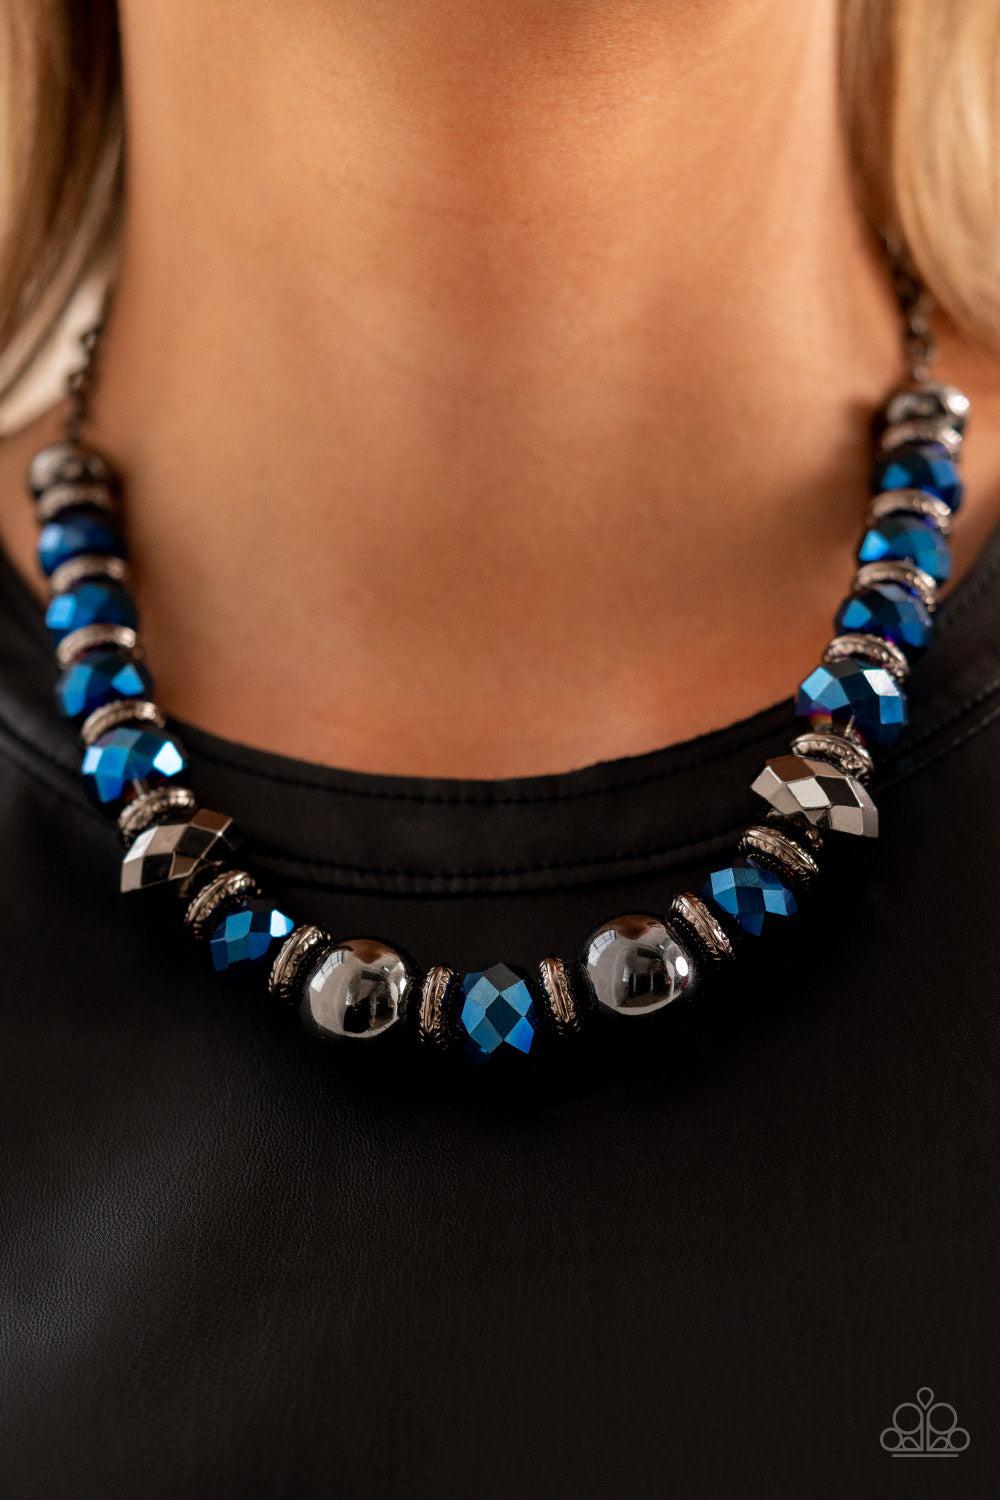 Interstellar Influencer Blue Necklace - Paparazzi Accessories- lightbox - CarasShop.com - $5 Jewelry by Cara Jewels